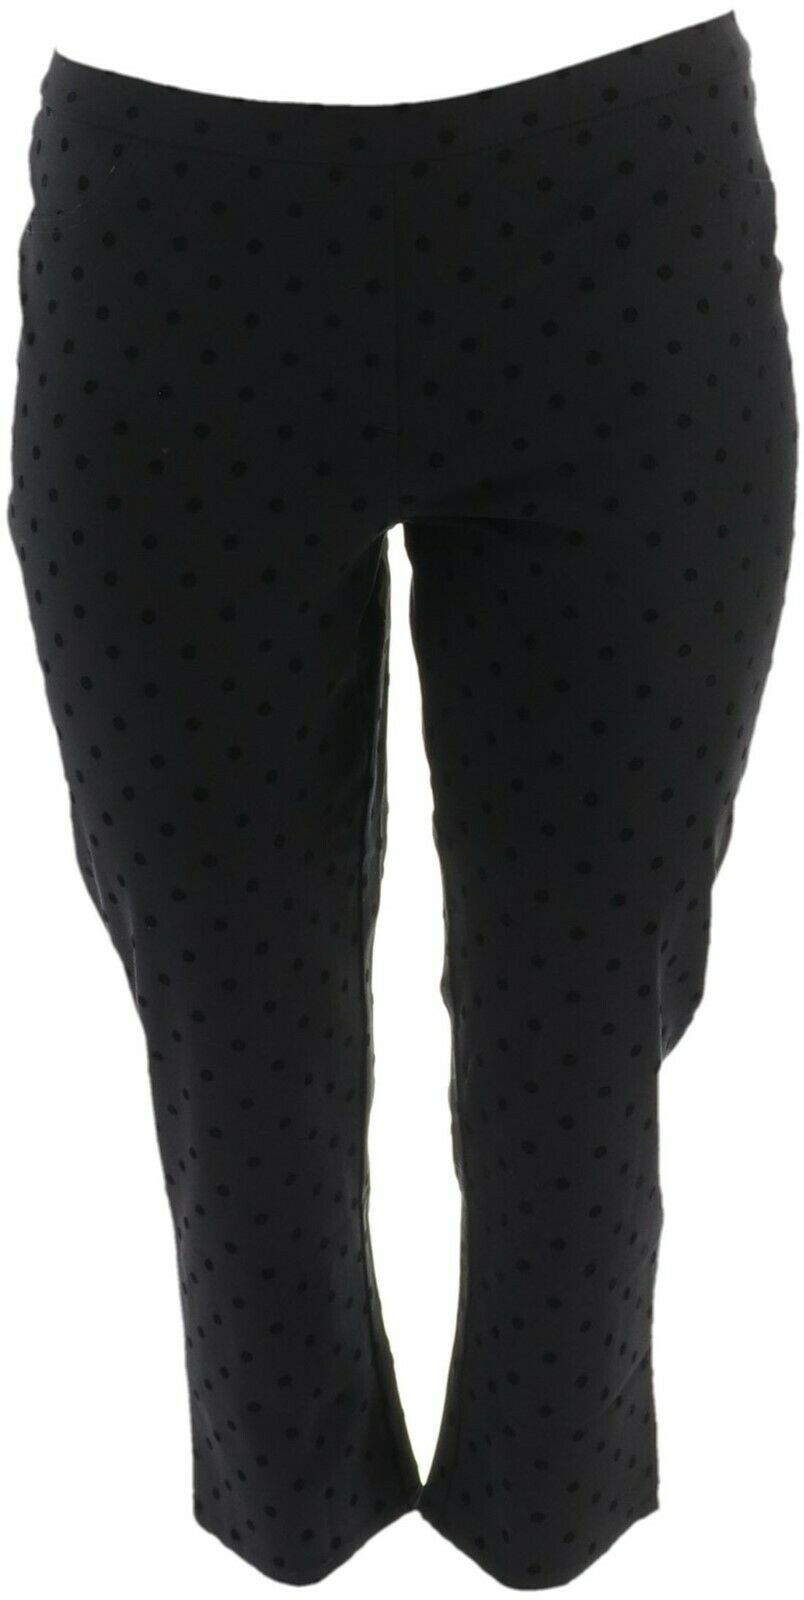 Isaac Mizrahi Petite 24/7 Polka Dot Ankle Pants Black 14P NEW A345781